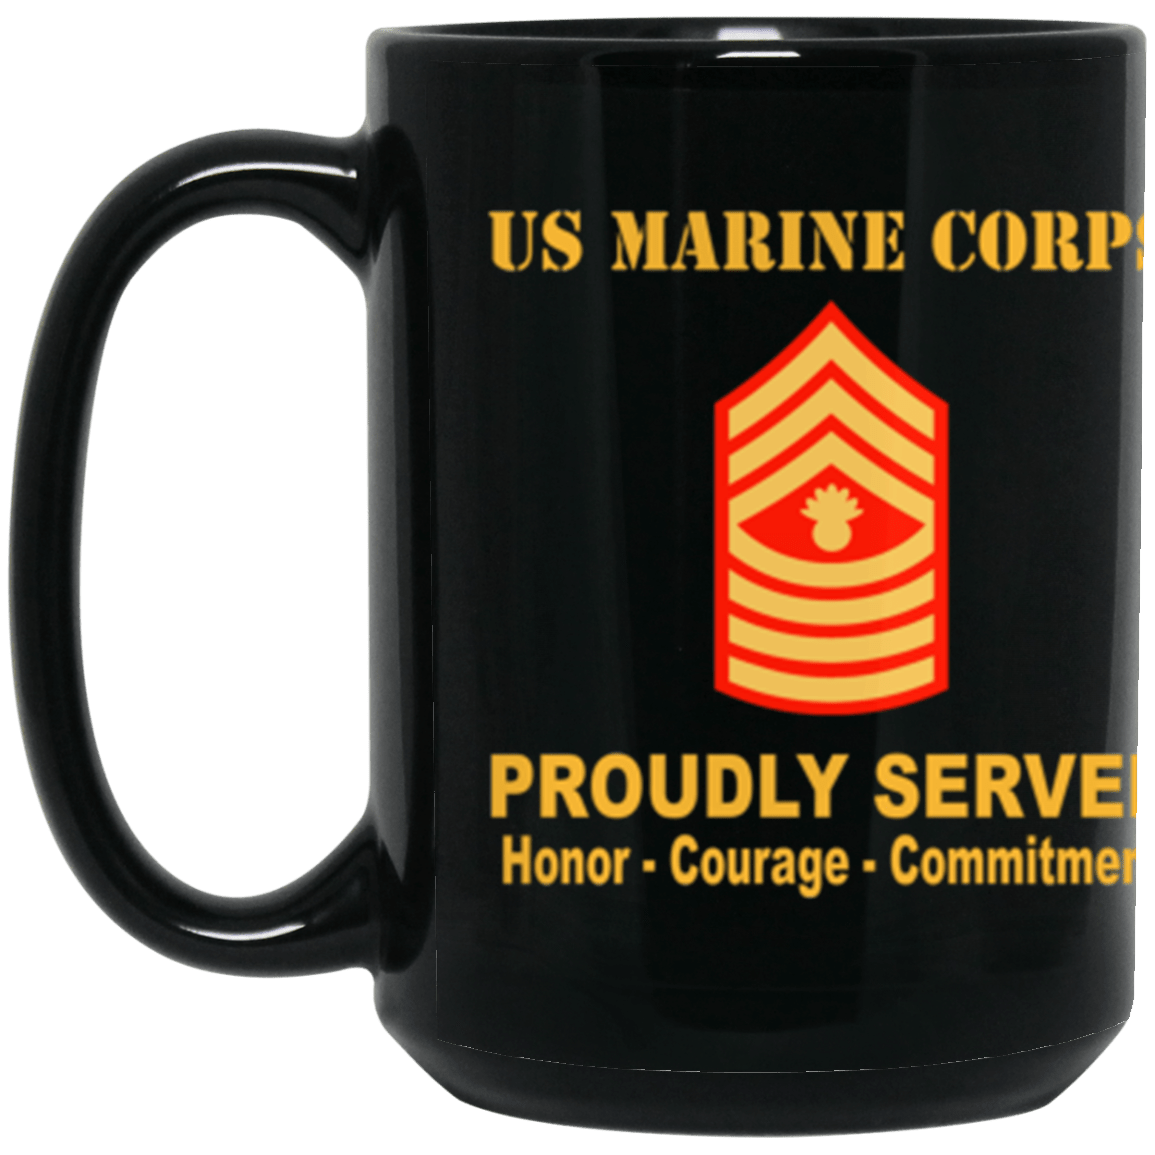 USMC E-9 Master Gunnery Sergeant E9 MGySg Staff Noncommissioned Officer Ranks Proudly Served Core Values 15 oz. Black Mug